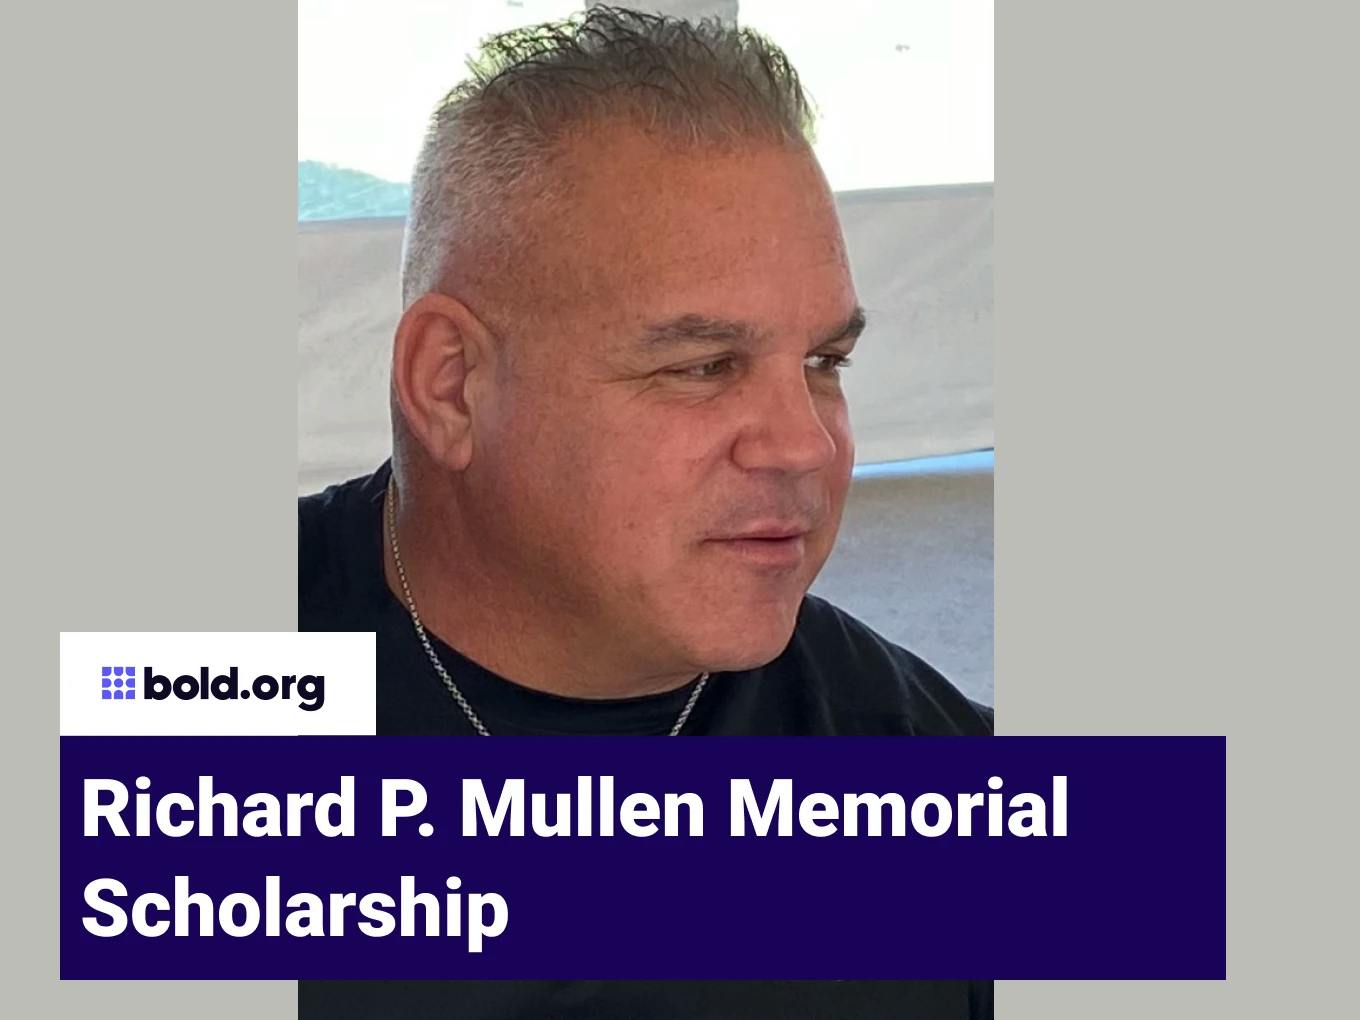 Richard P. Mullen Memorial Scholarship